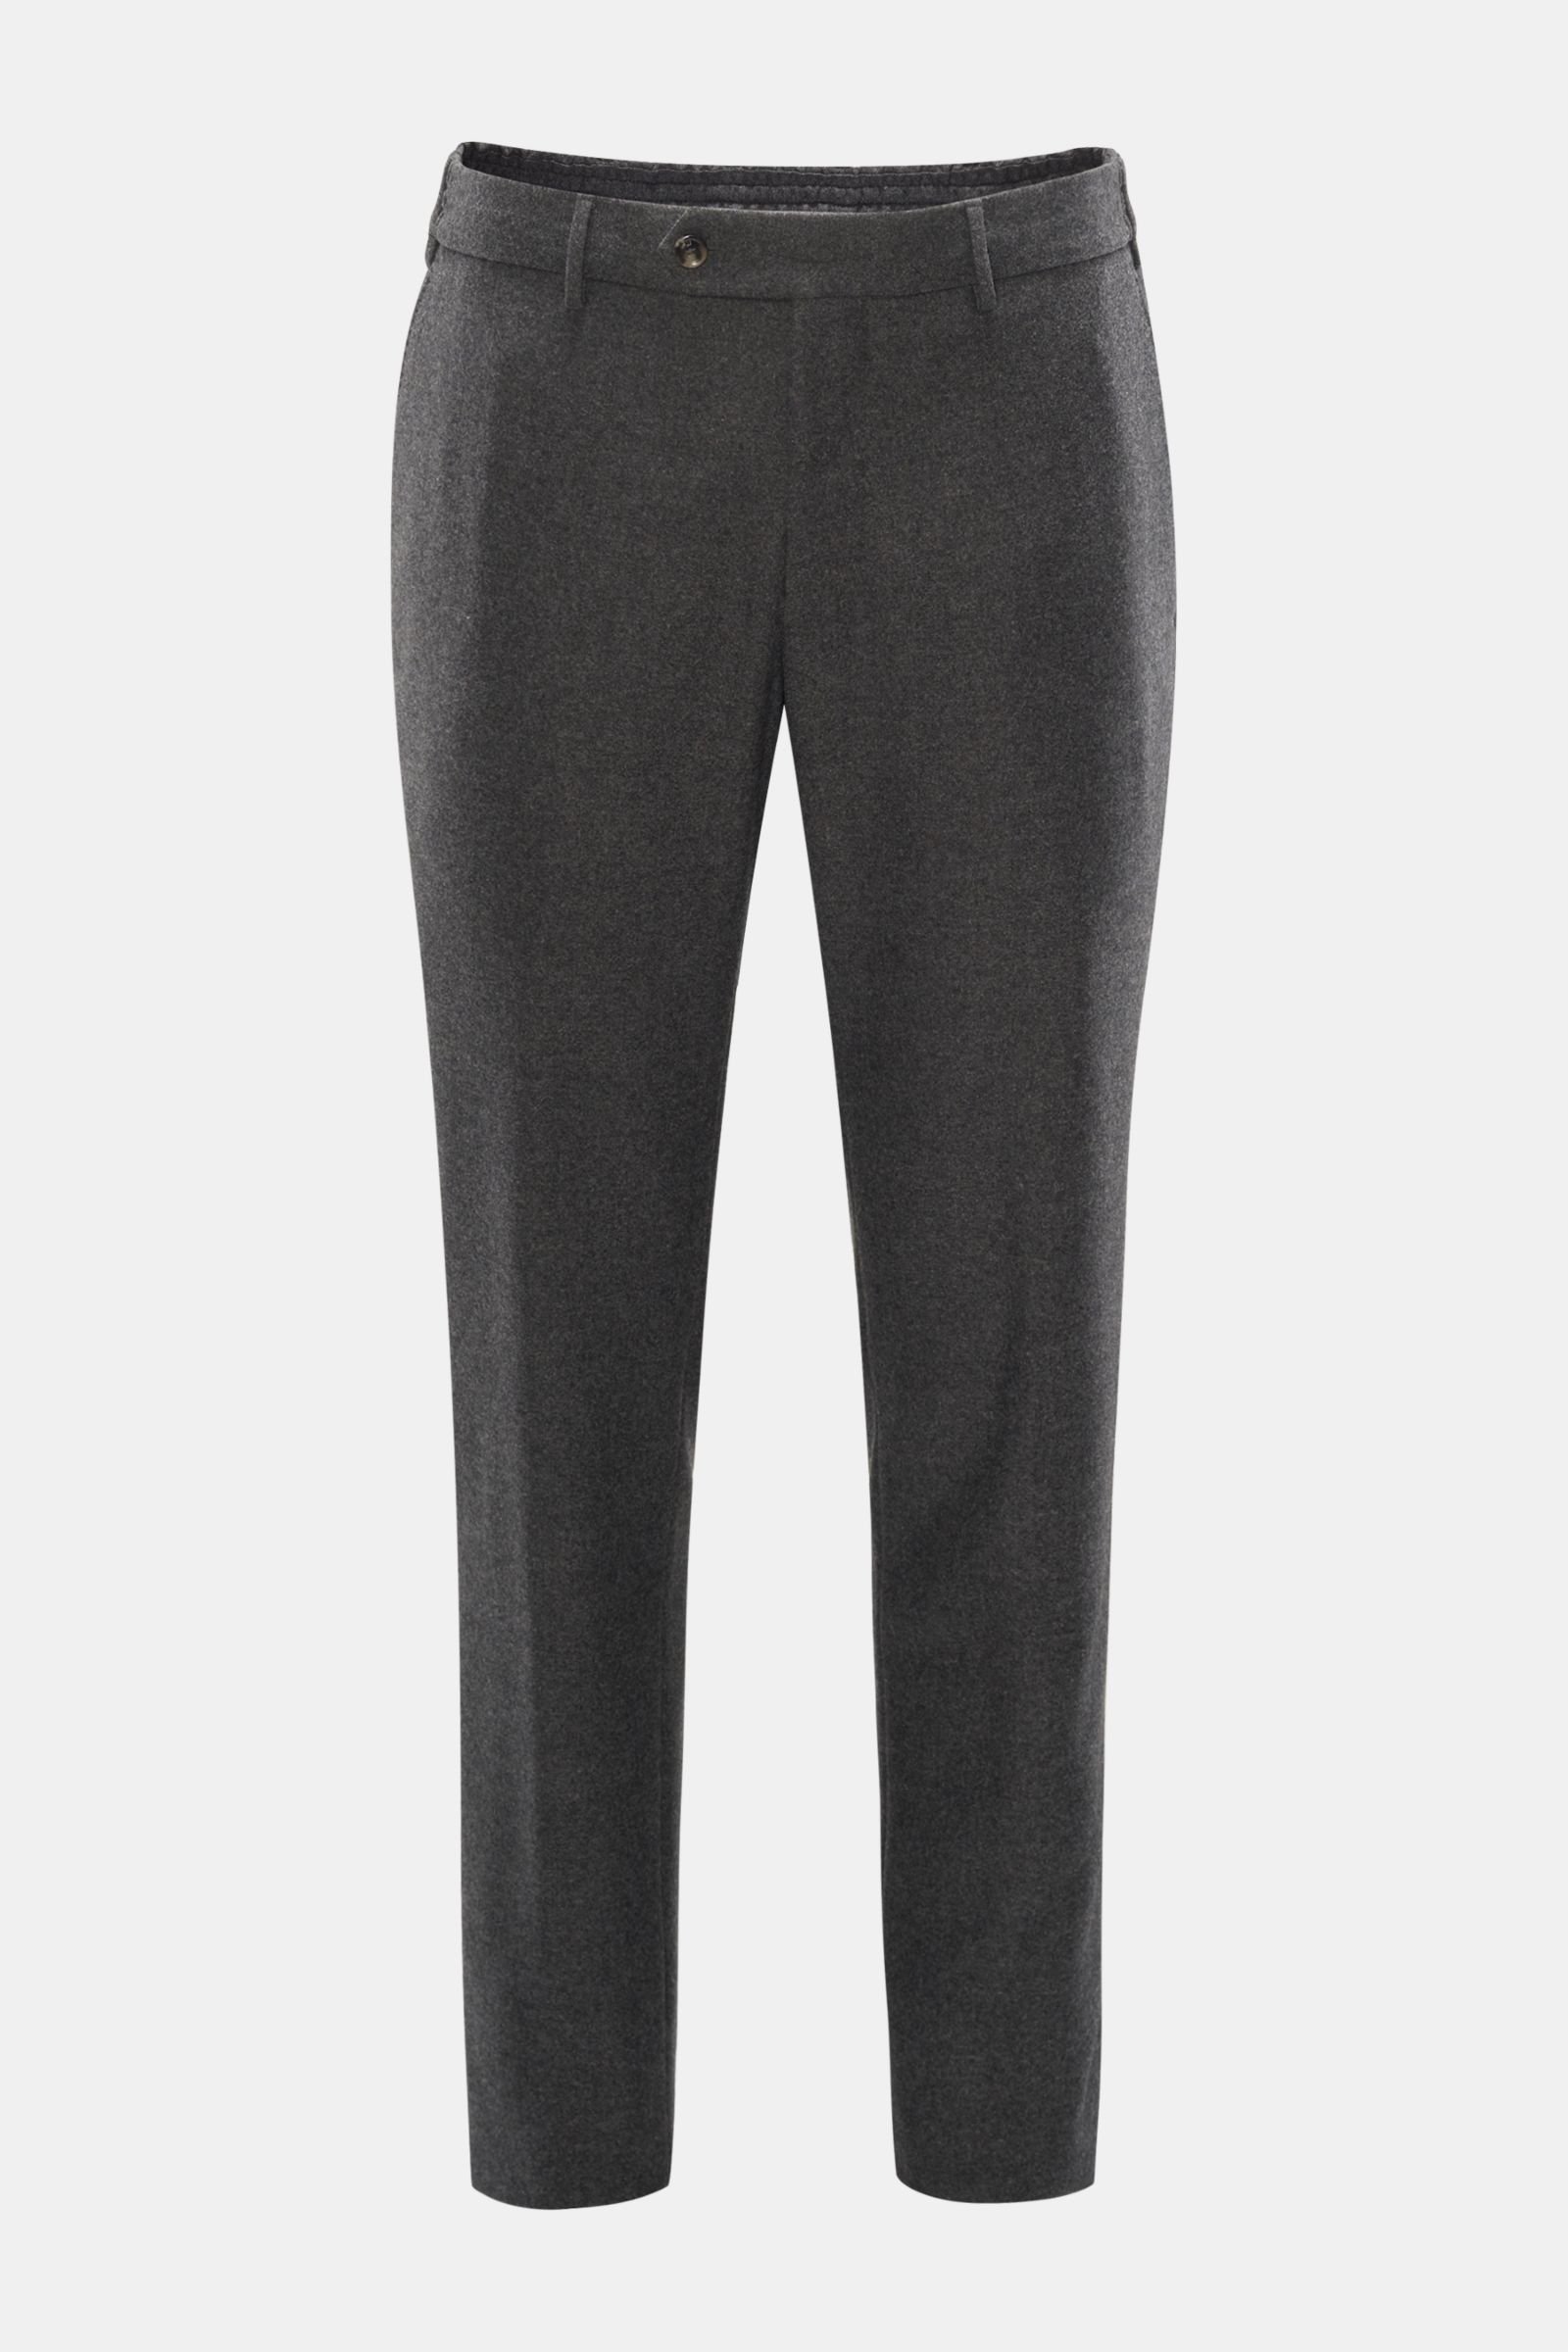 Wool jogger pants 'Slim Fit' grey